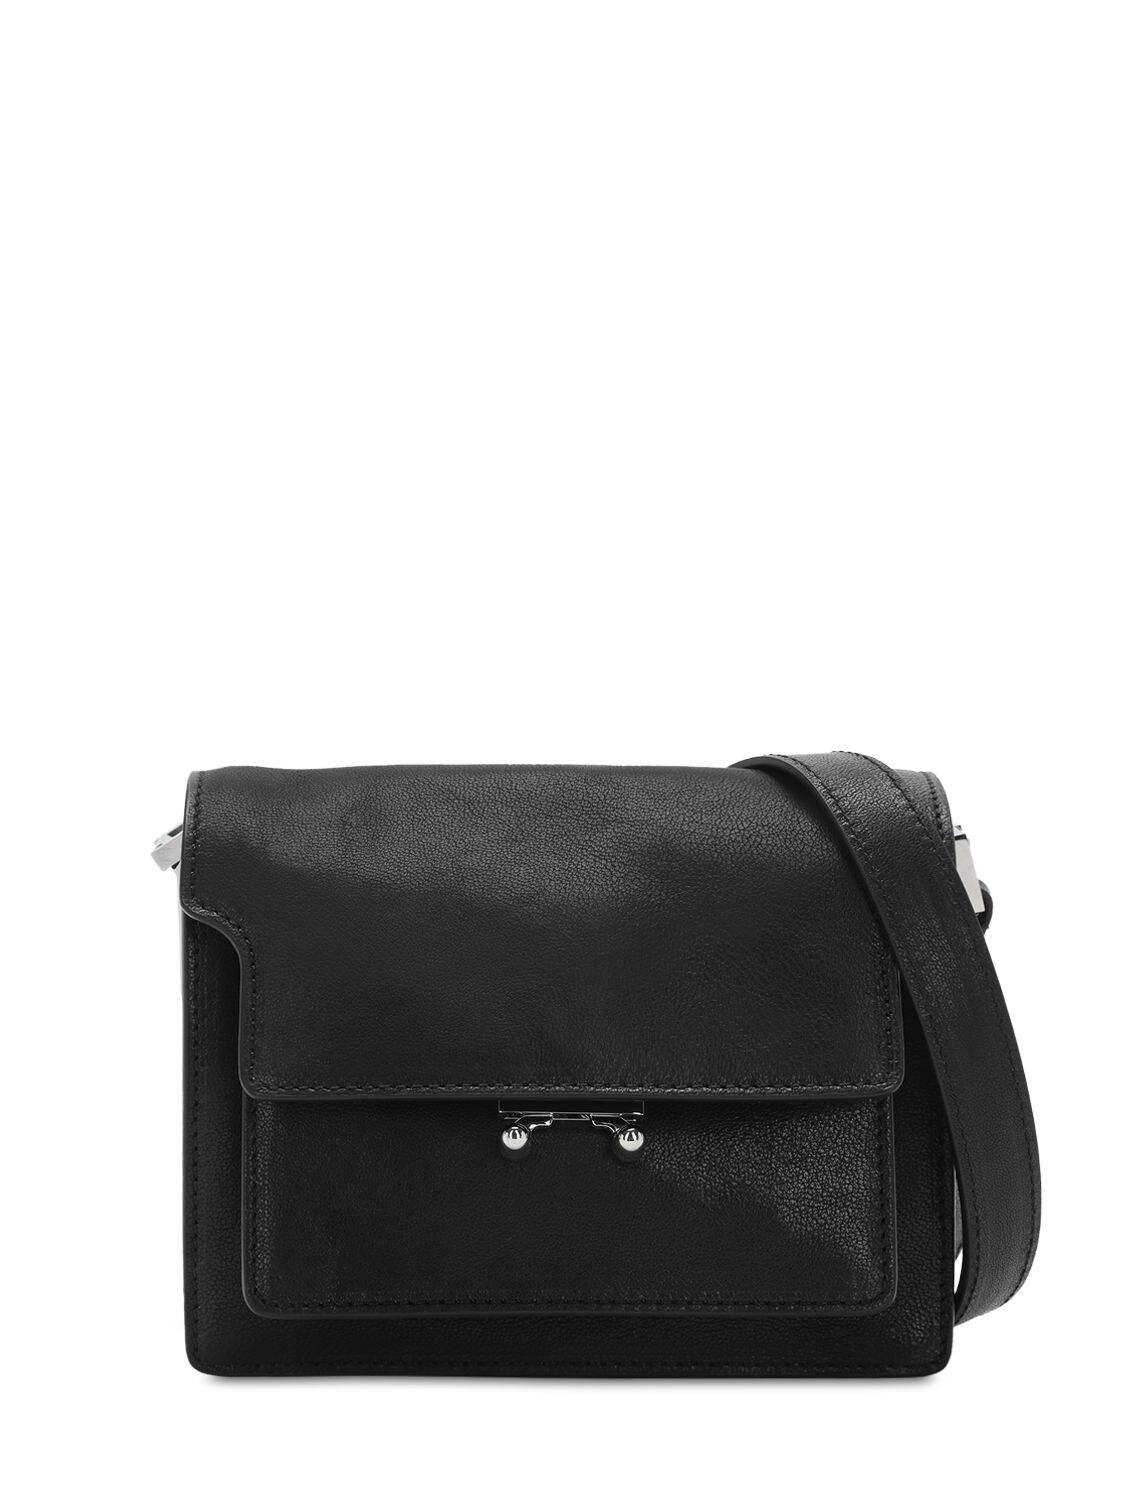 Marni Black Mini Soft Trunk Bag